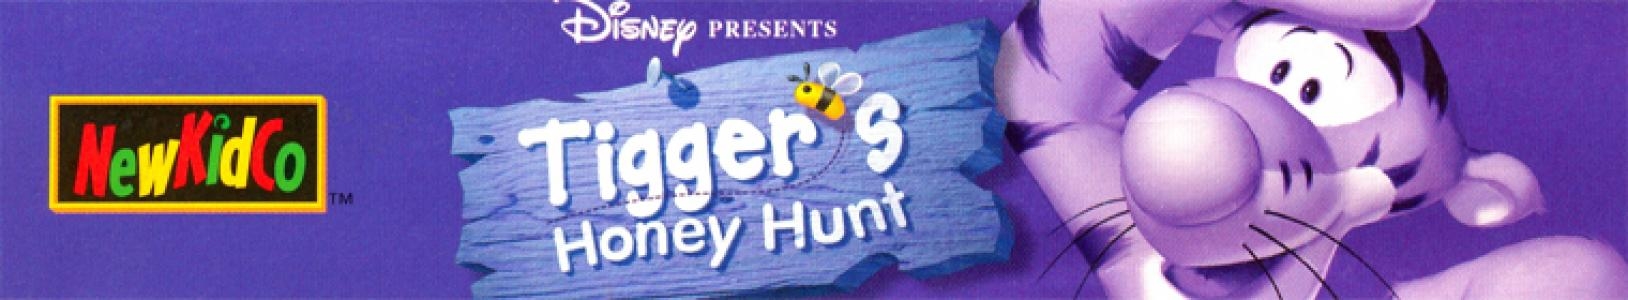 Tigger's Honey Hunt banner